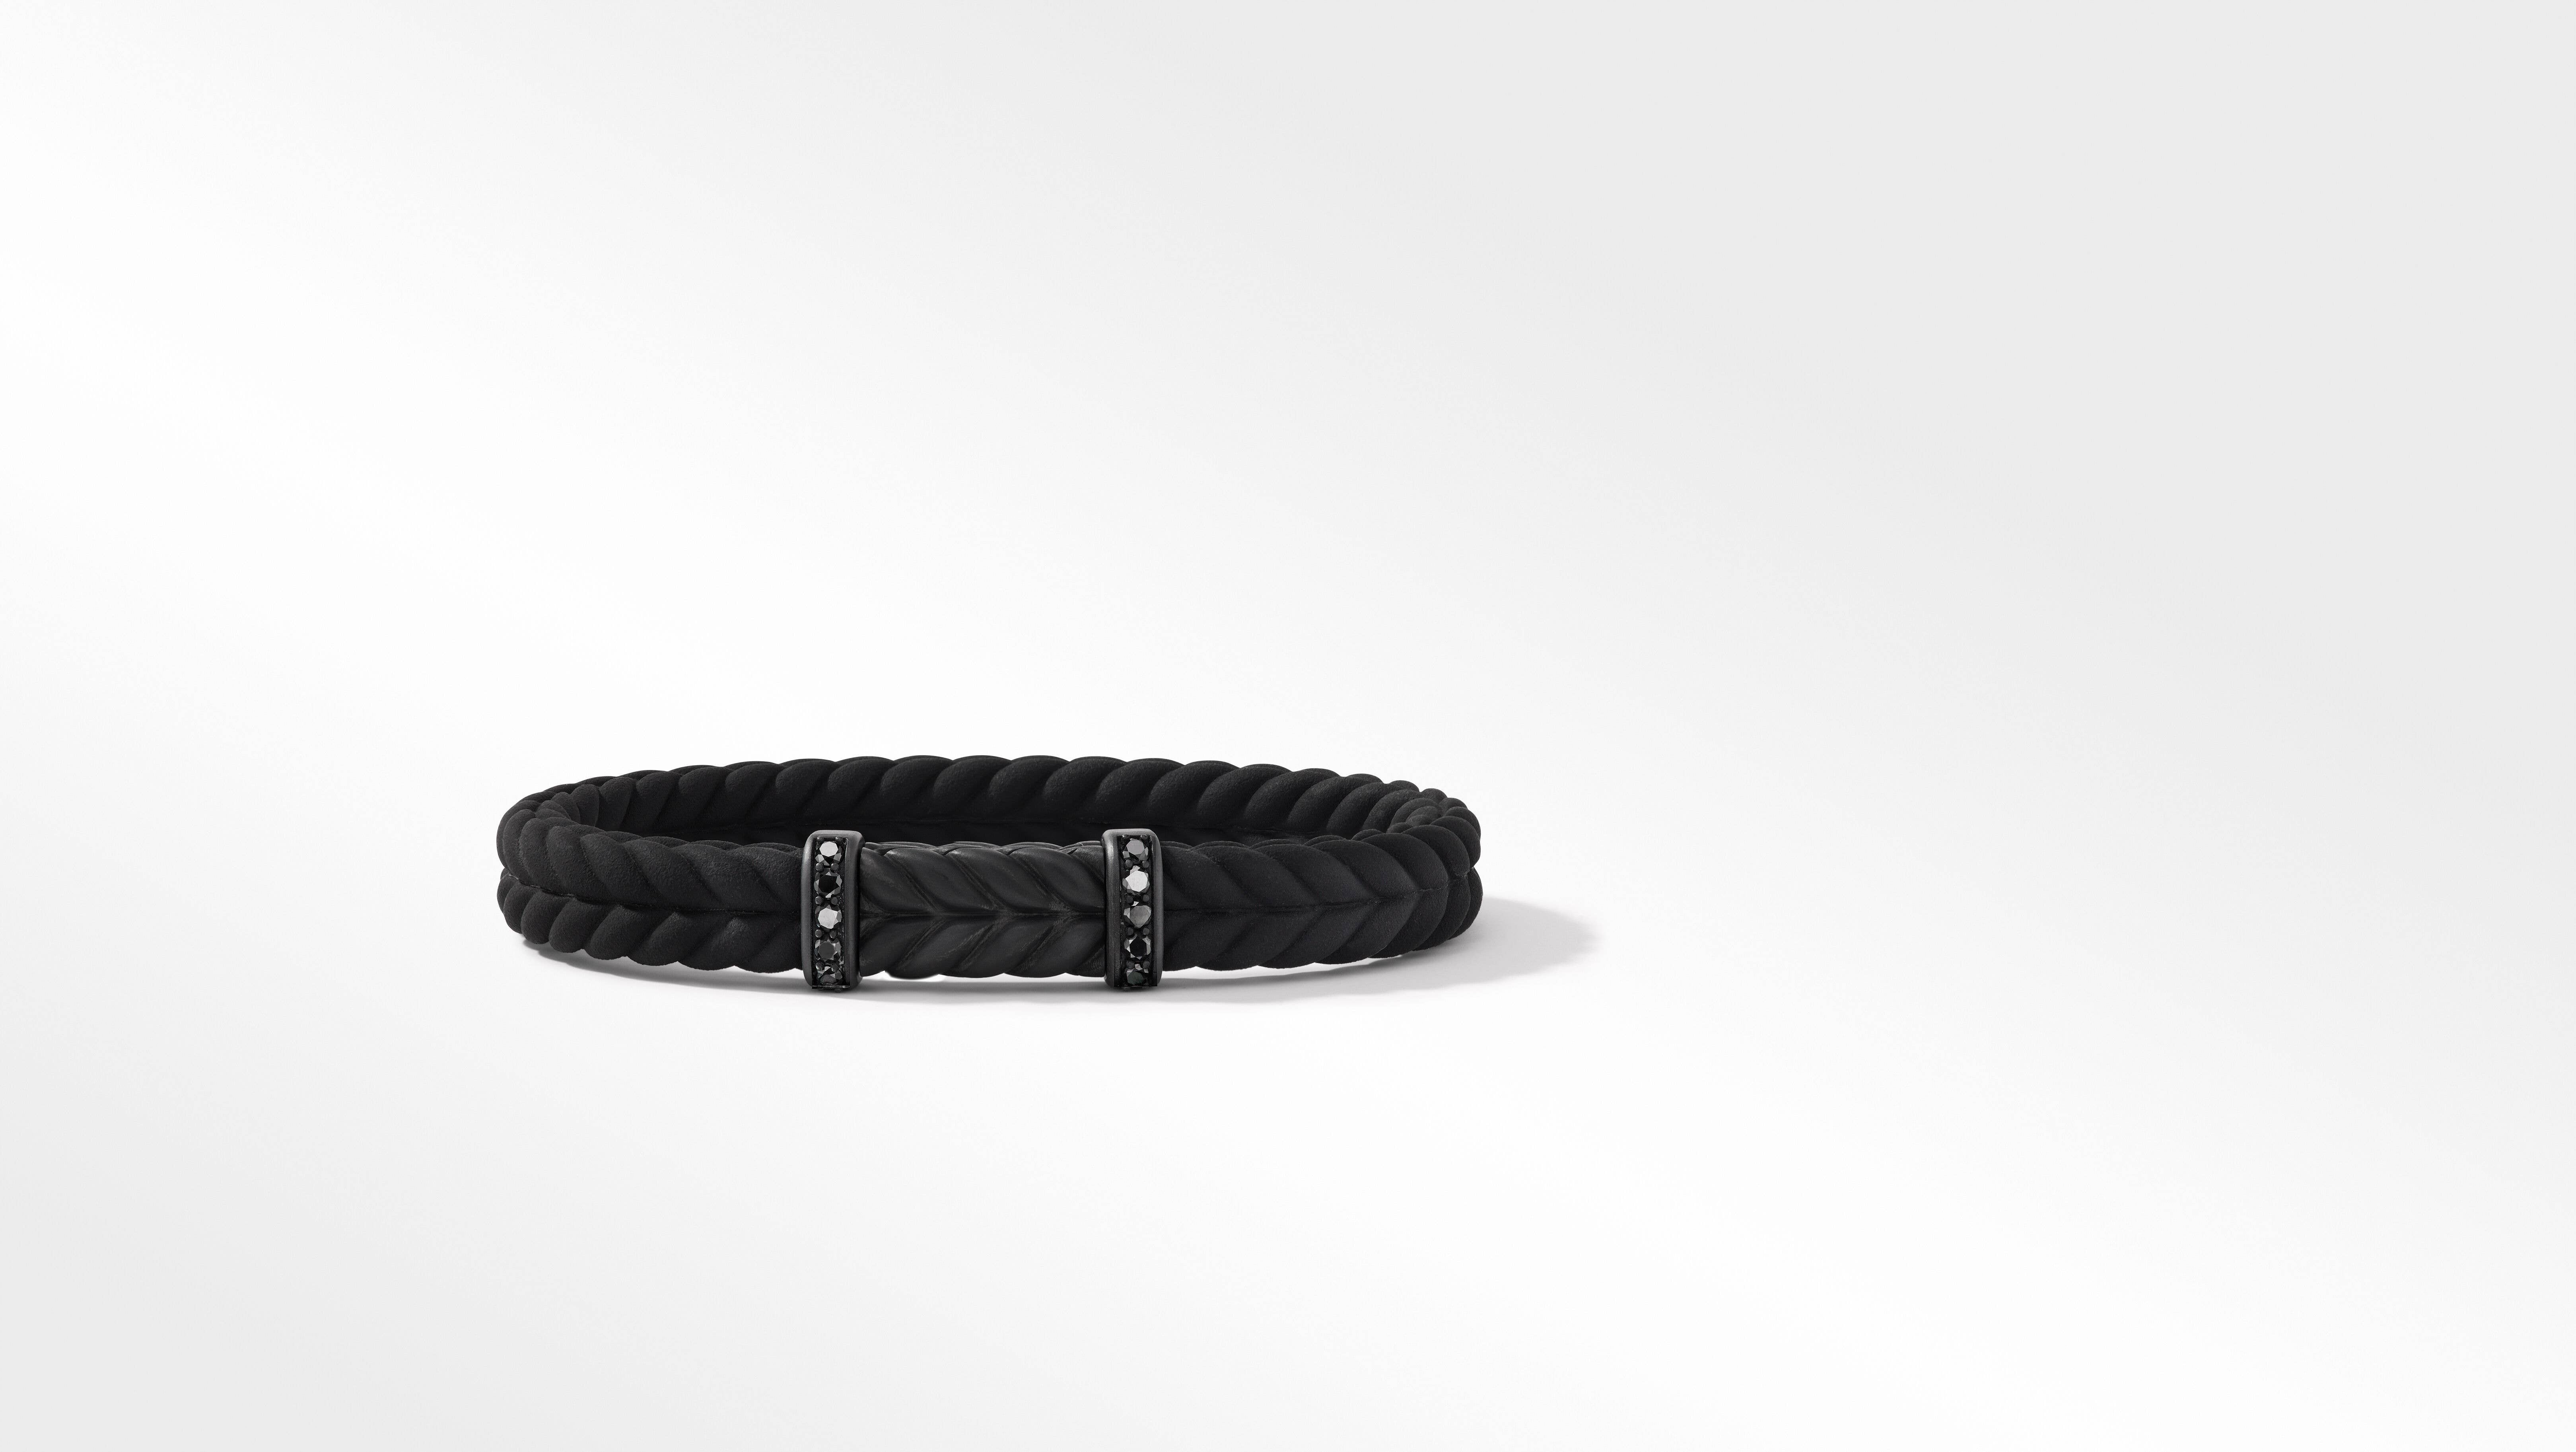 Buy YOOHUA 60CS Inspirational Rubber Bracelet Motivational Quote Silicone  Bracelets 20 Styles Black Stretch Wristbands for Men Women Teens at  Amazonin